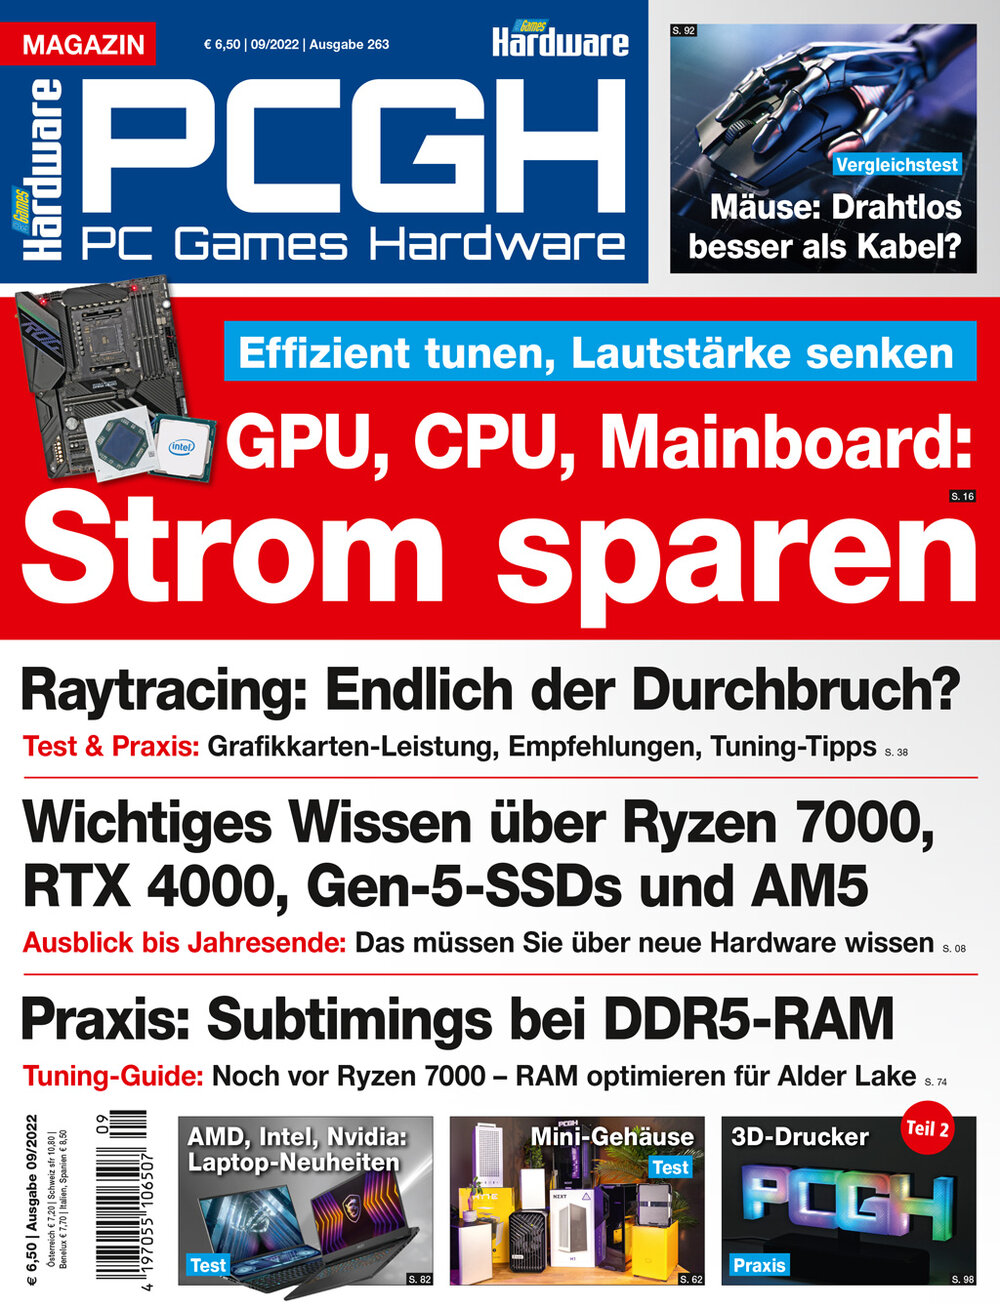 PCGH Magazin ePaper 09/2022